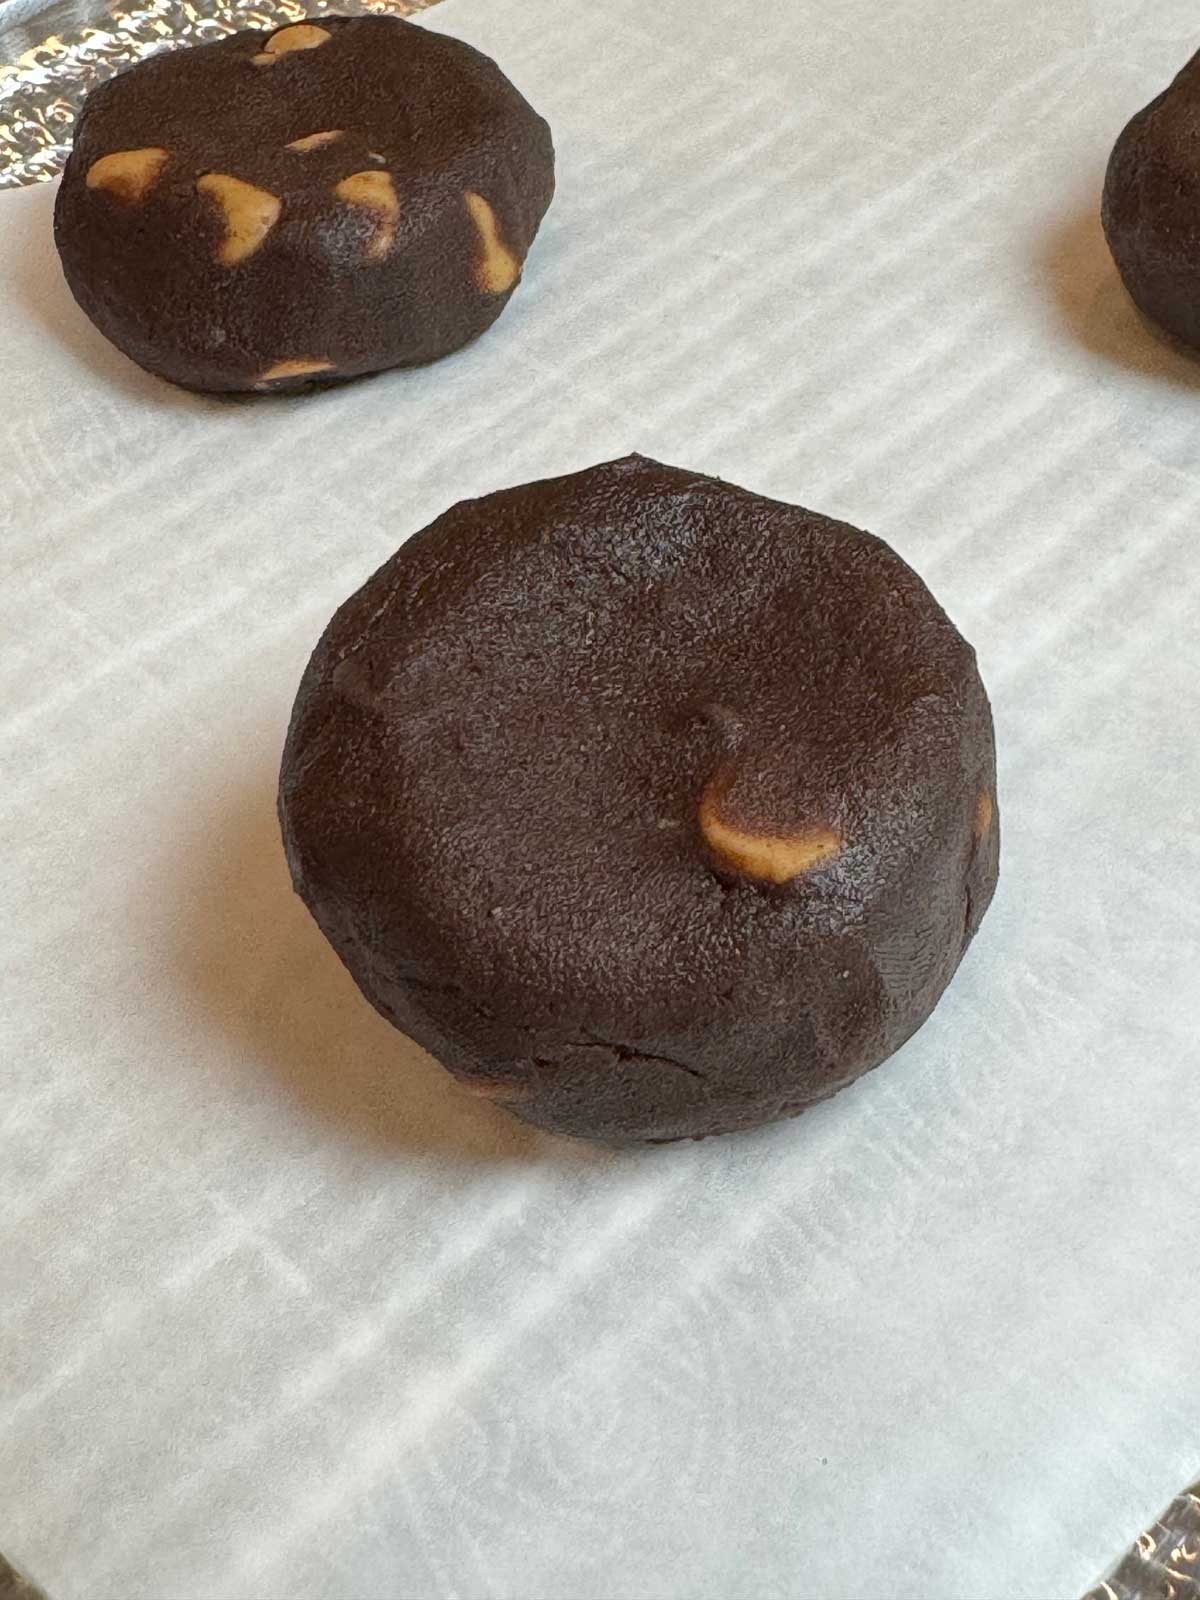 Reese's Peanut Butter Chips cookie dough balls